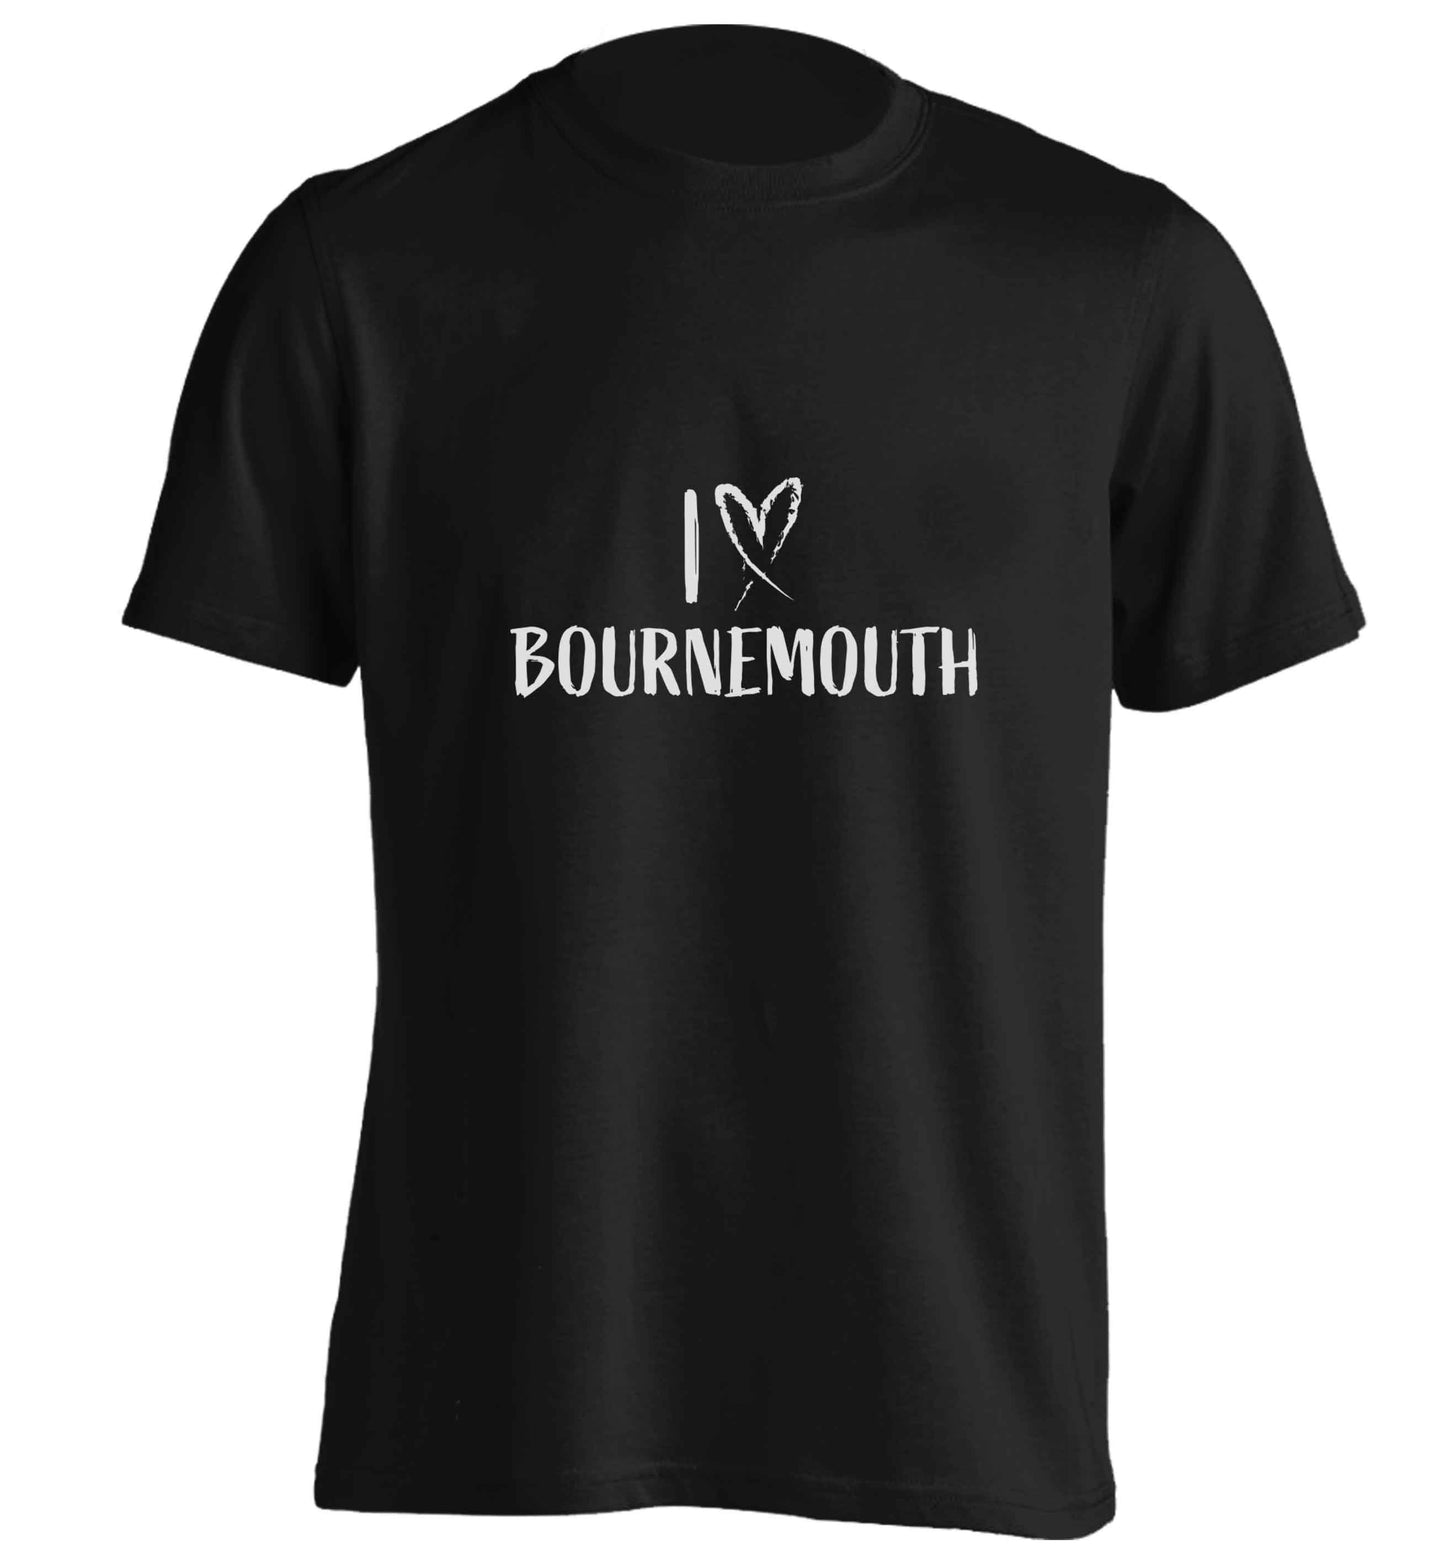 I love Bournemouth adults unisex black Tshirt 2XL